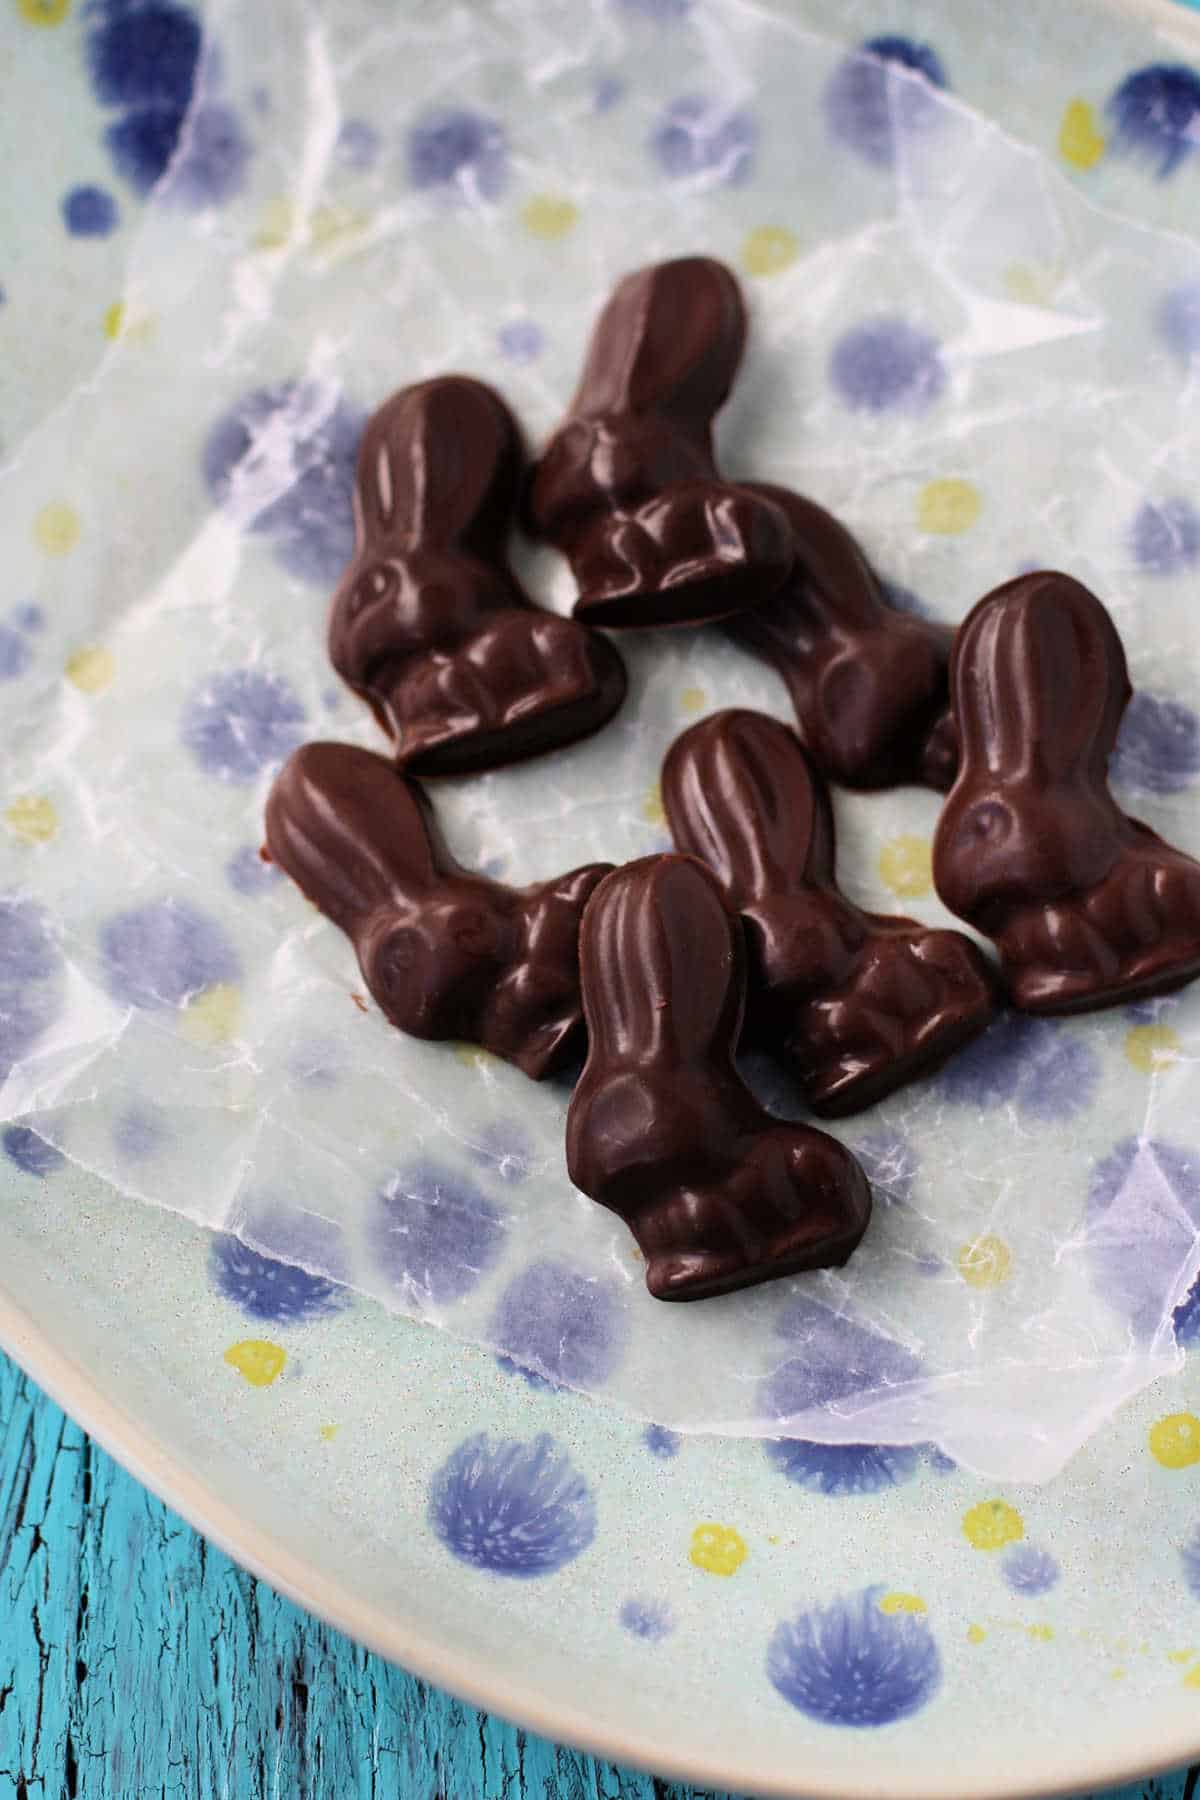 homemade chocolate bunnies on a plate